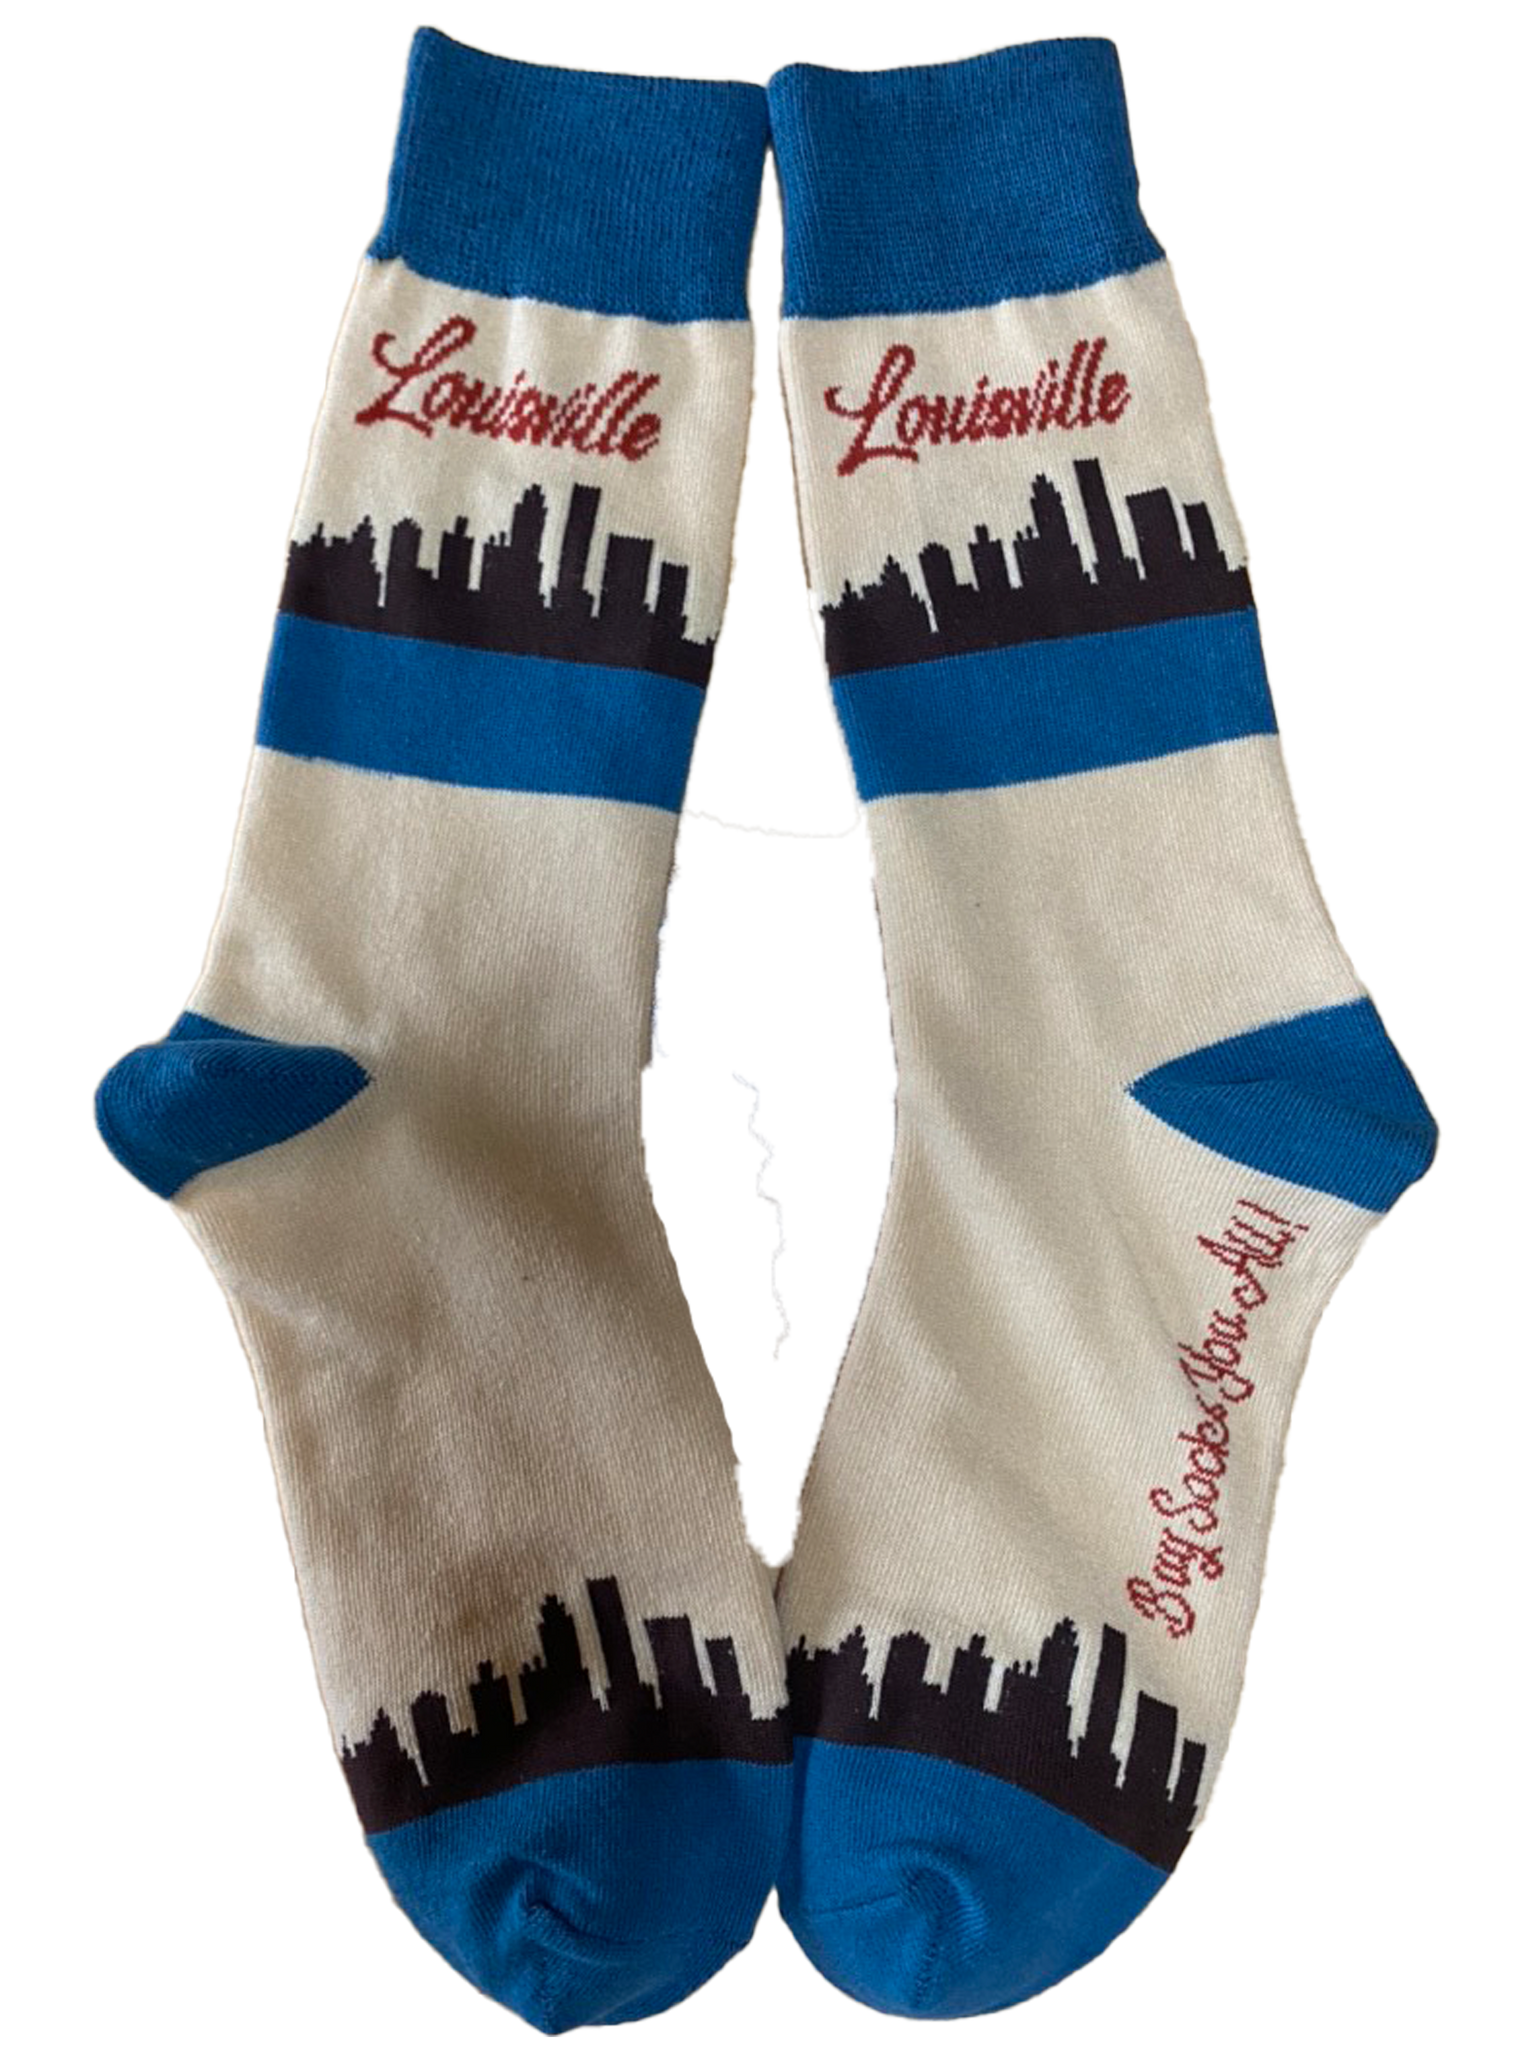 Louisville Kentucky Skyline Men's Socks